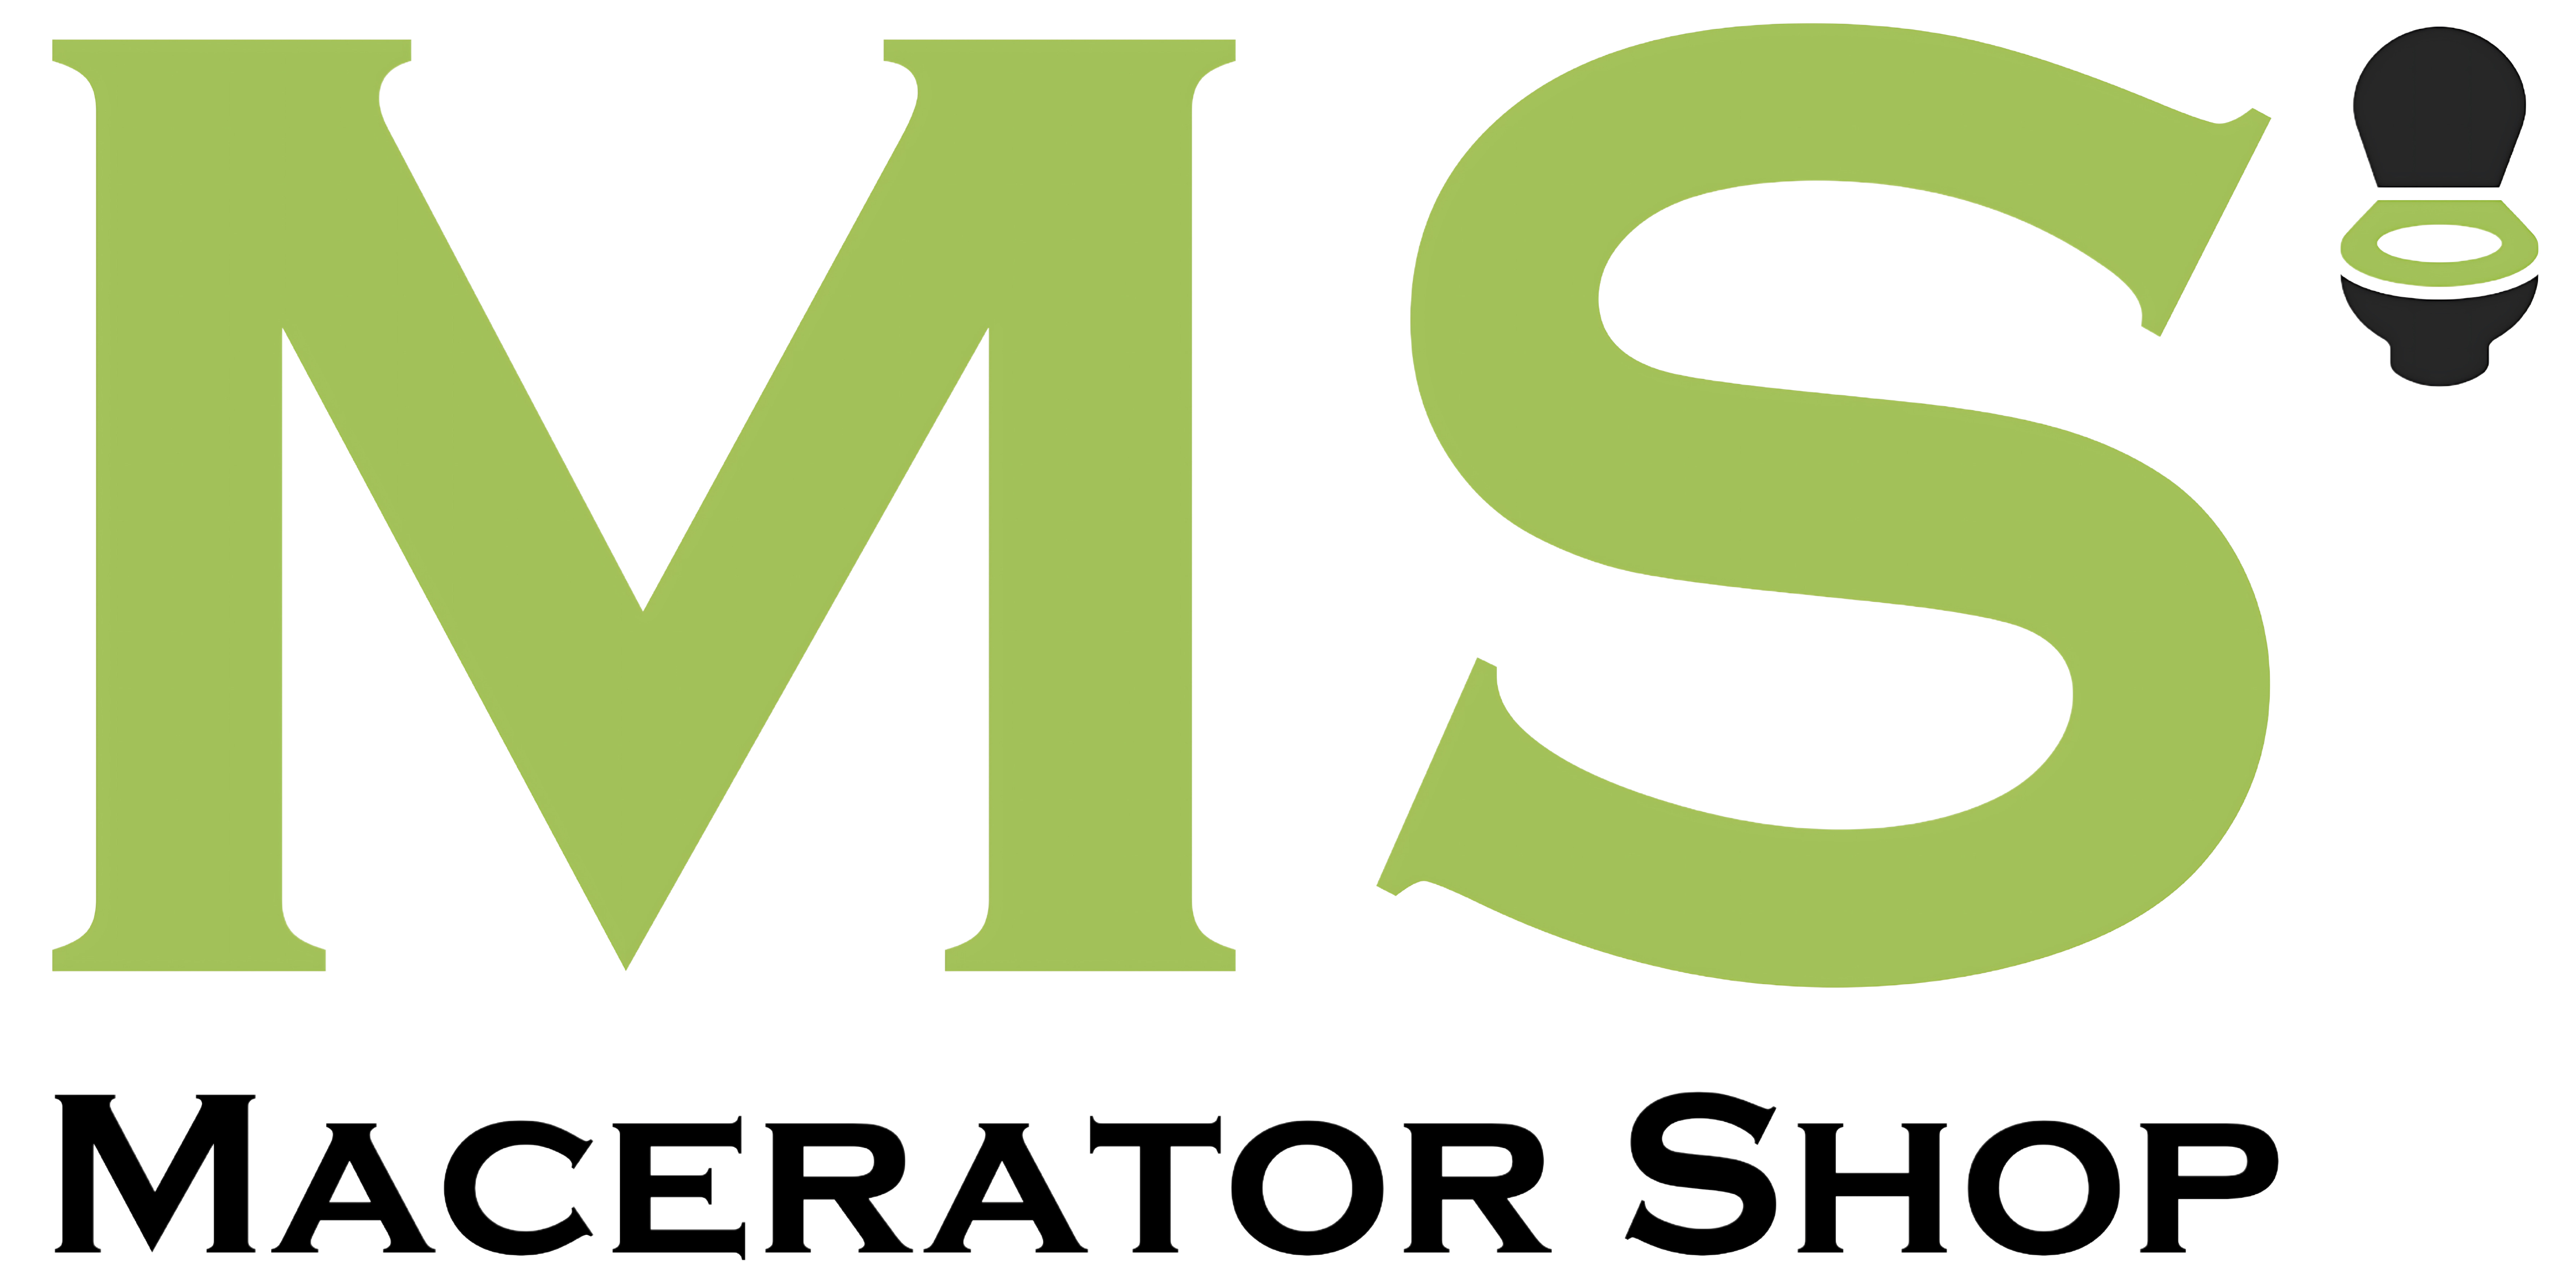 Macerator Shop